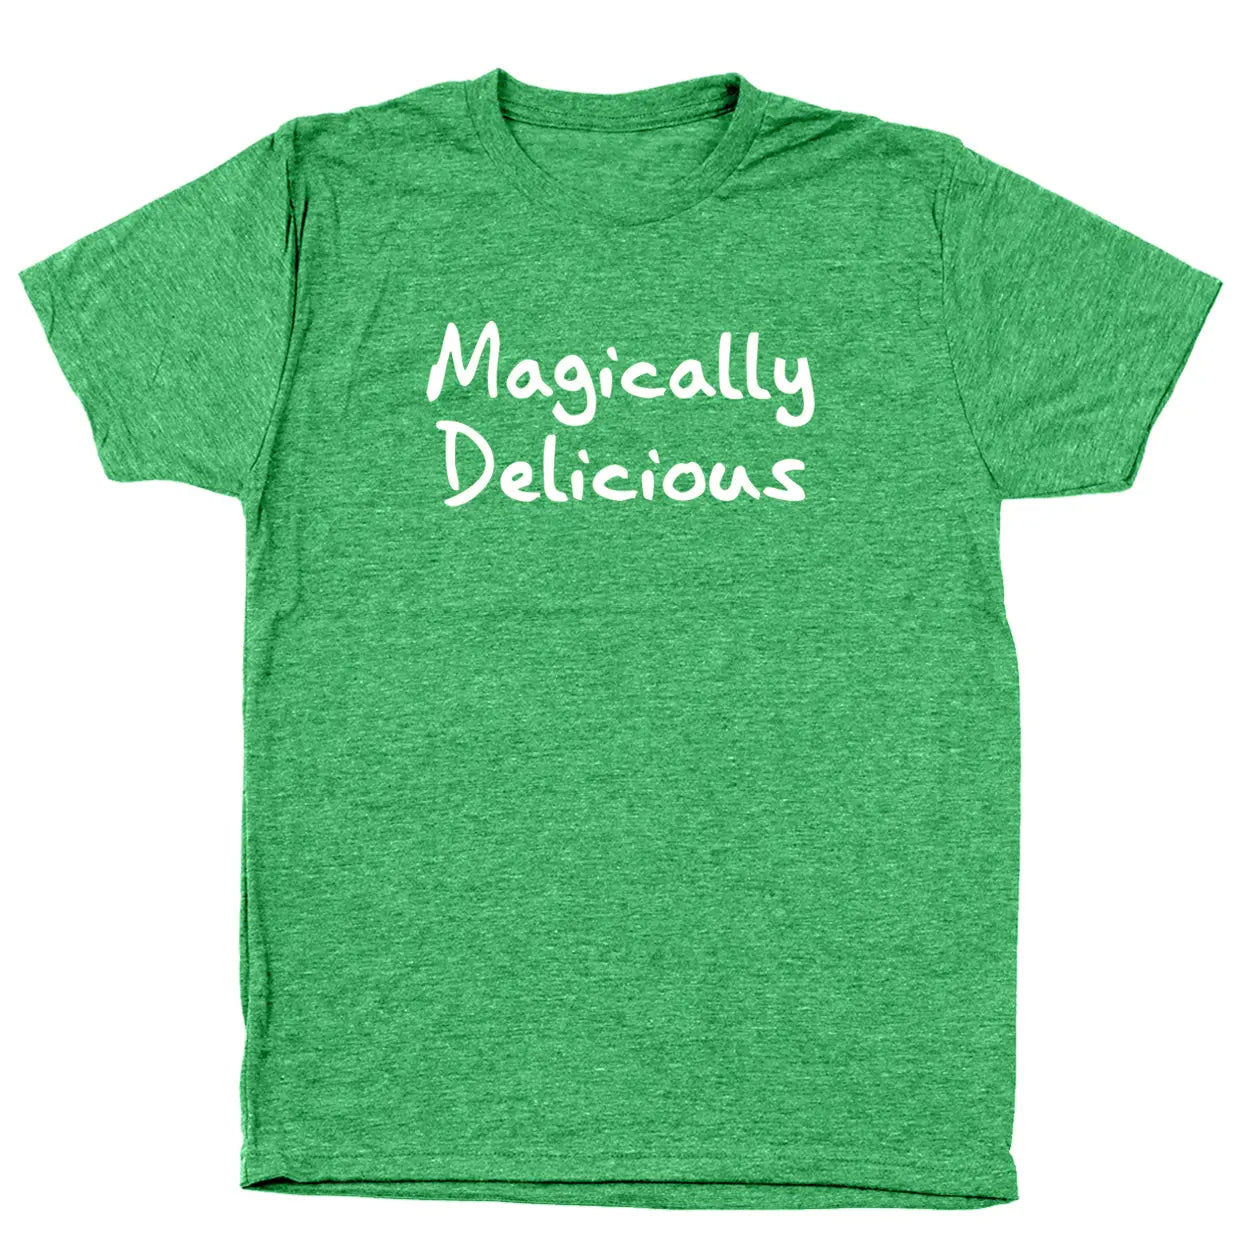 Magically Delicious Tshirt - Donkey Tees